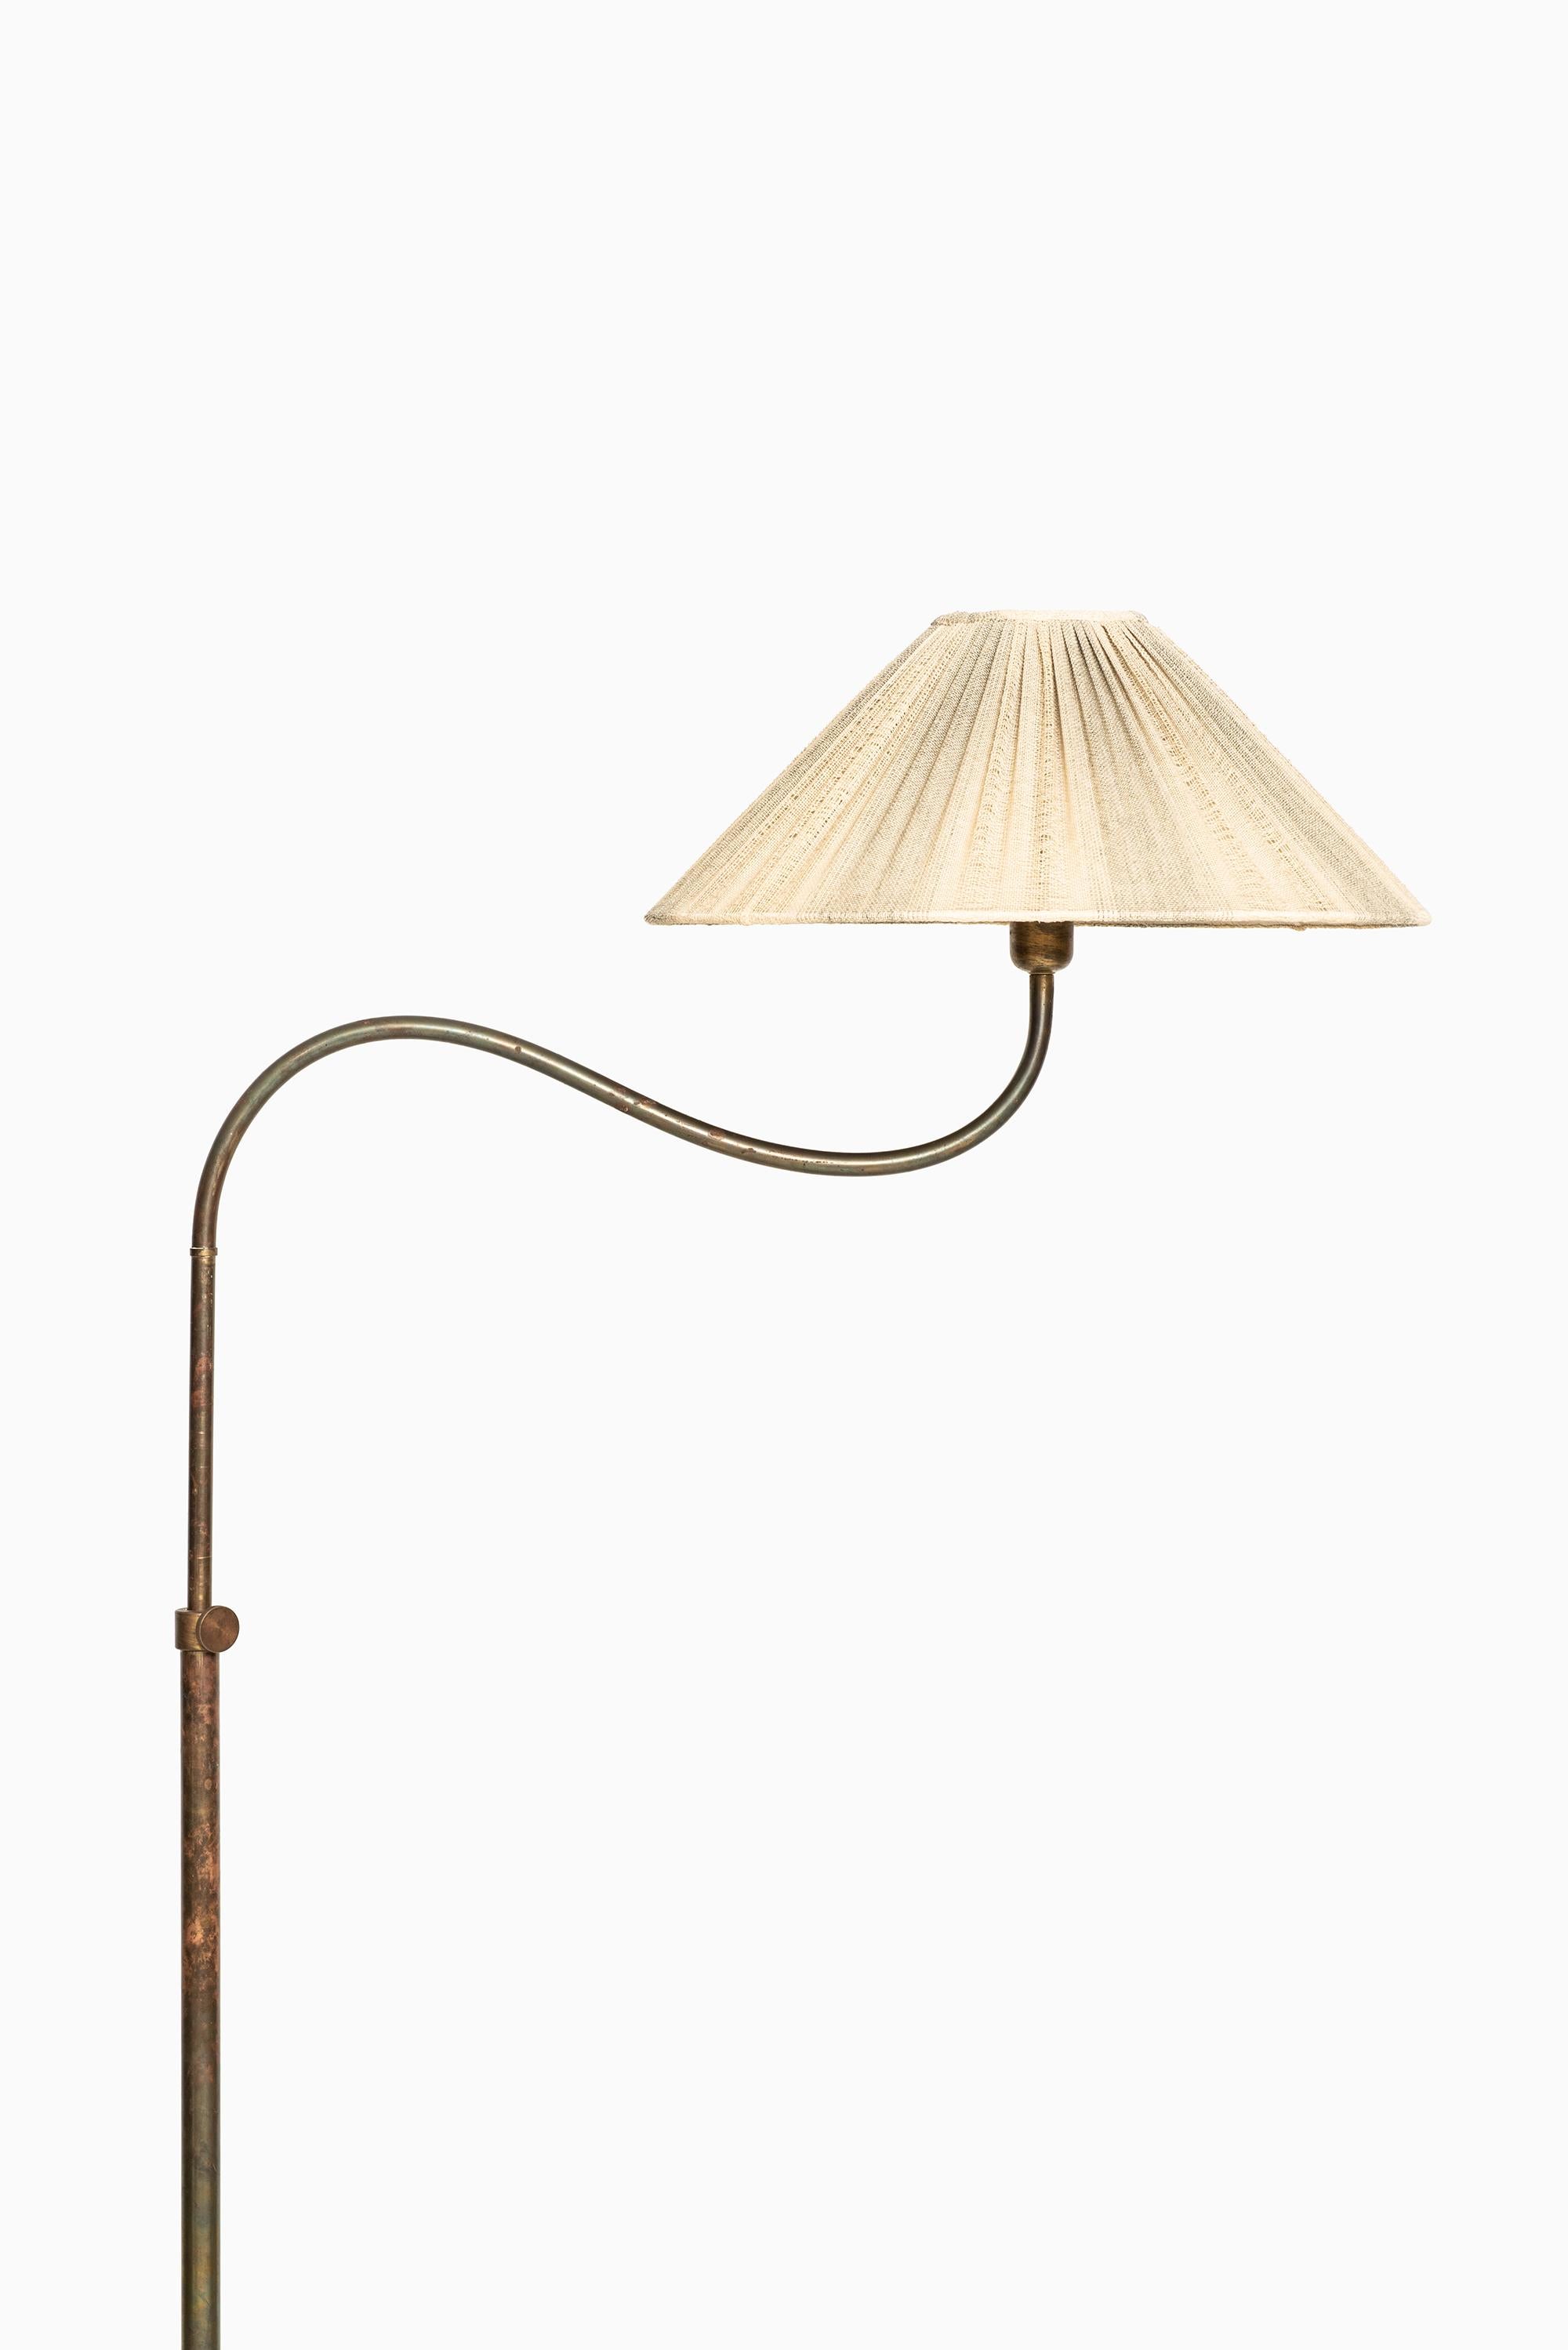 Swedish Josef Frank Early Floor Lamp Produced by Svenskt Tenn in Sweden